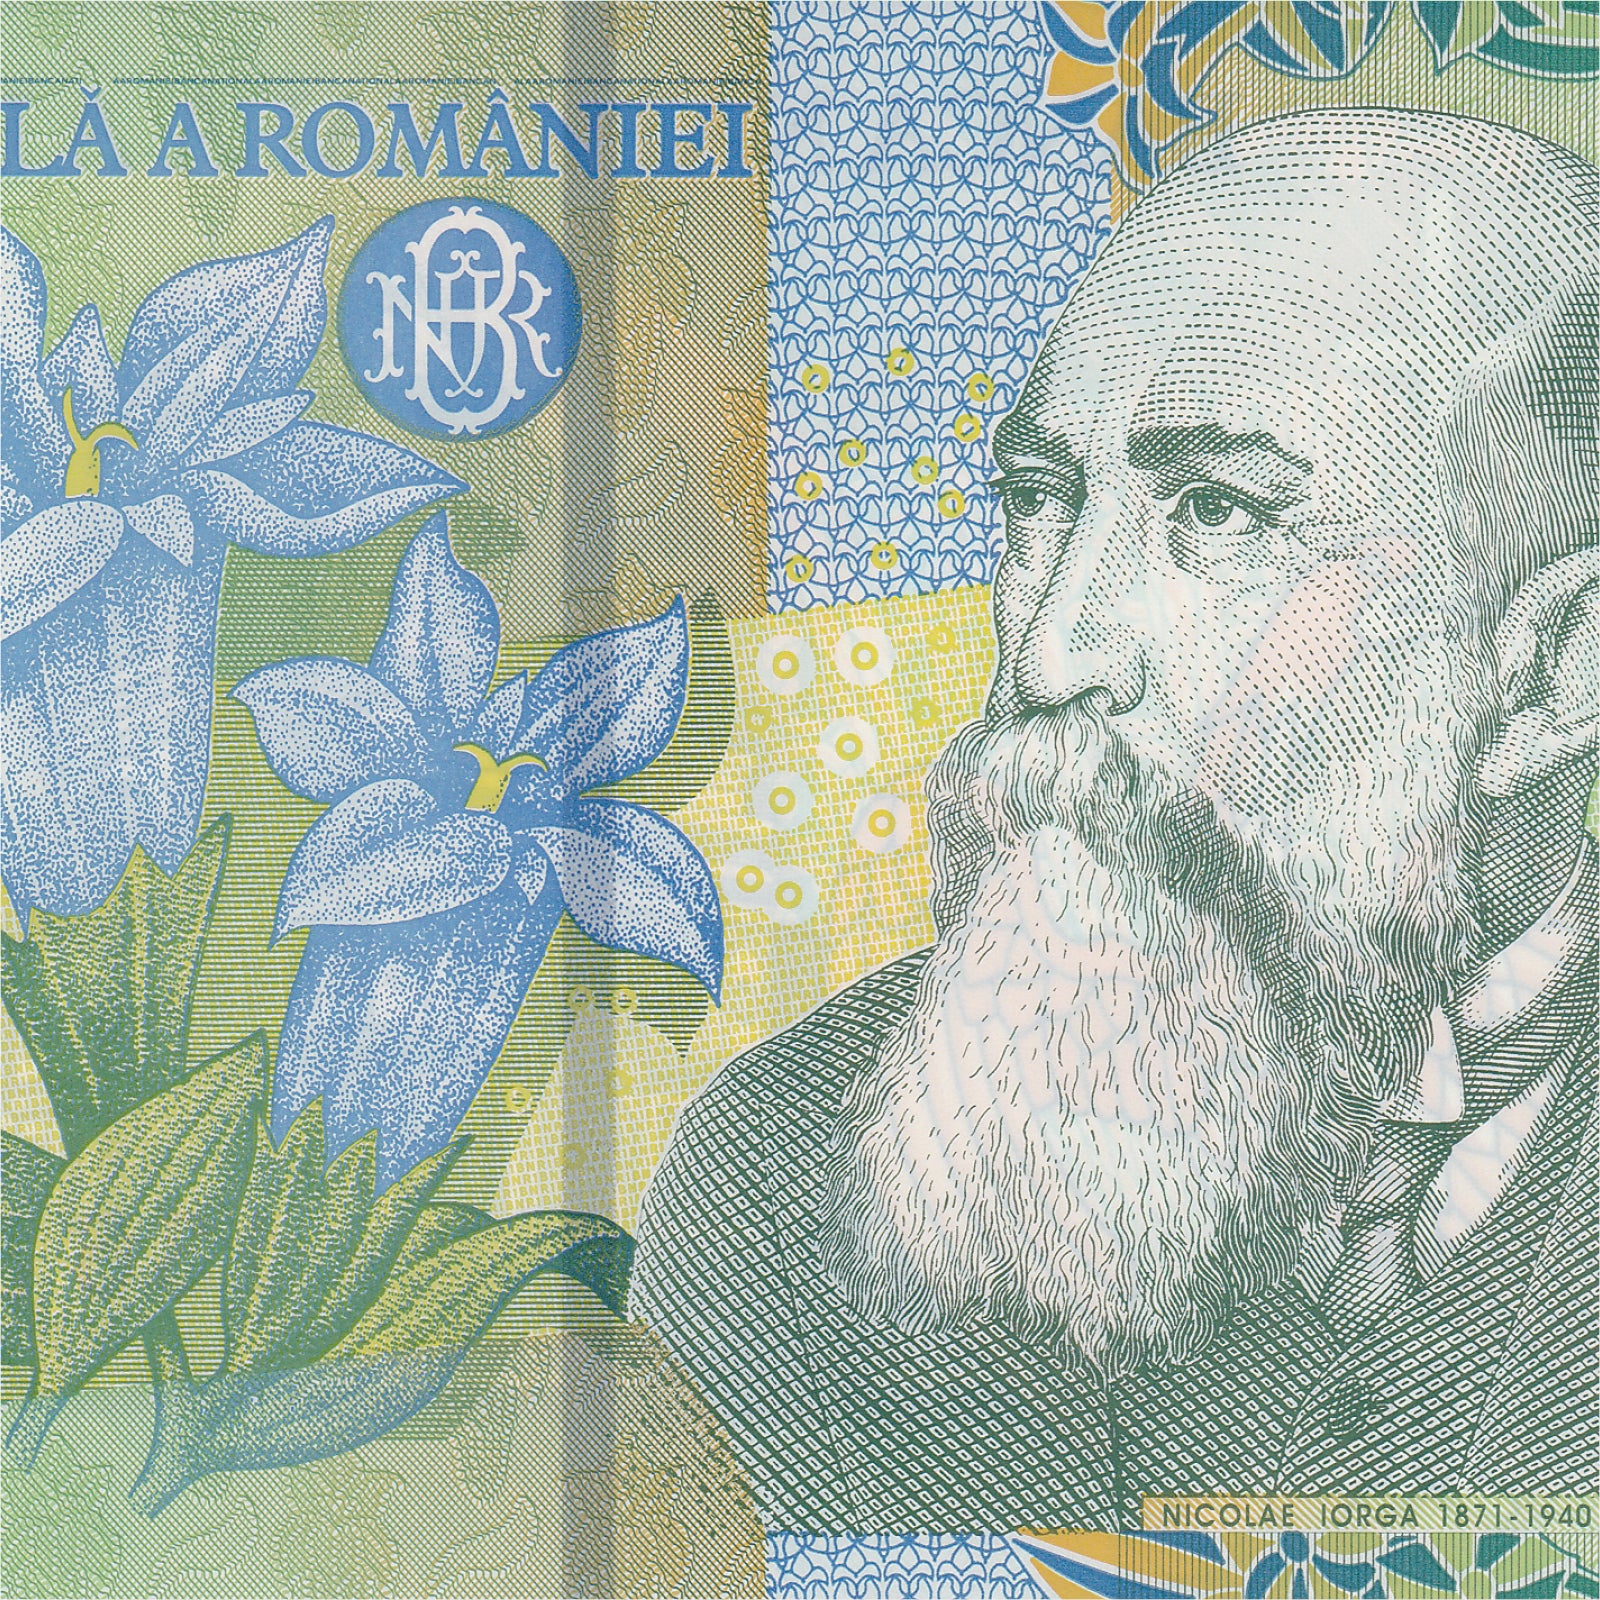 Romania 1 Leu, 2005 (2013), B278h, P117h, UNC - Robert's World Money - World Banknotes